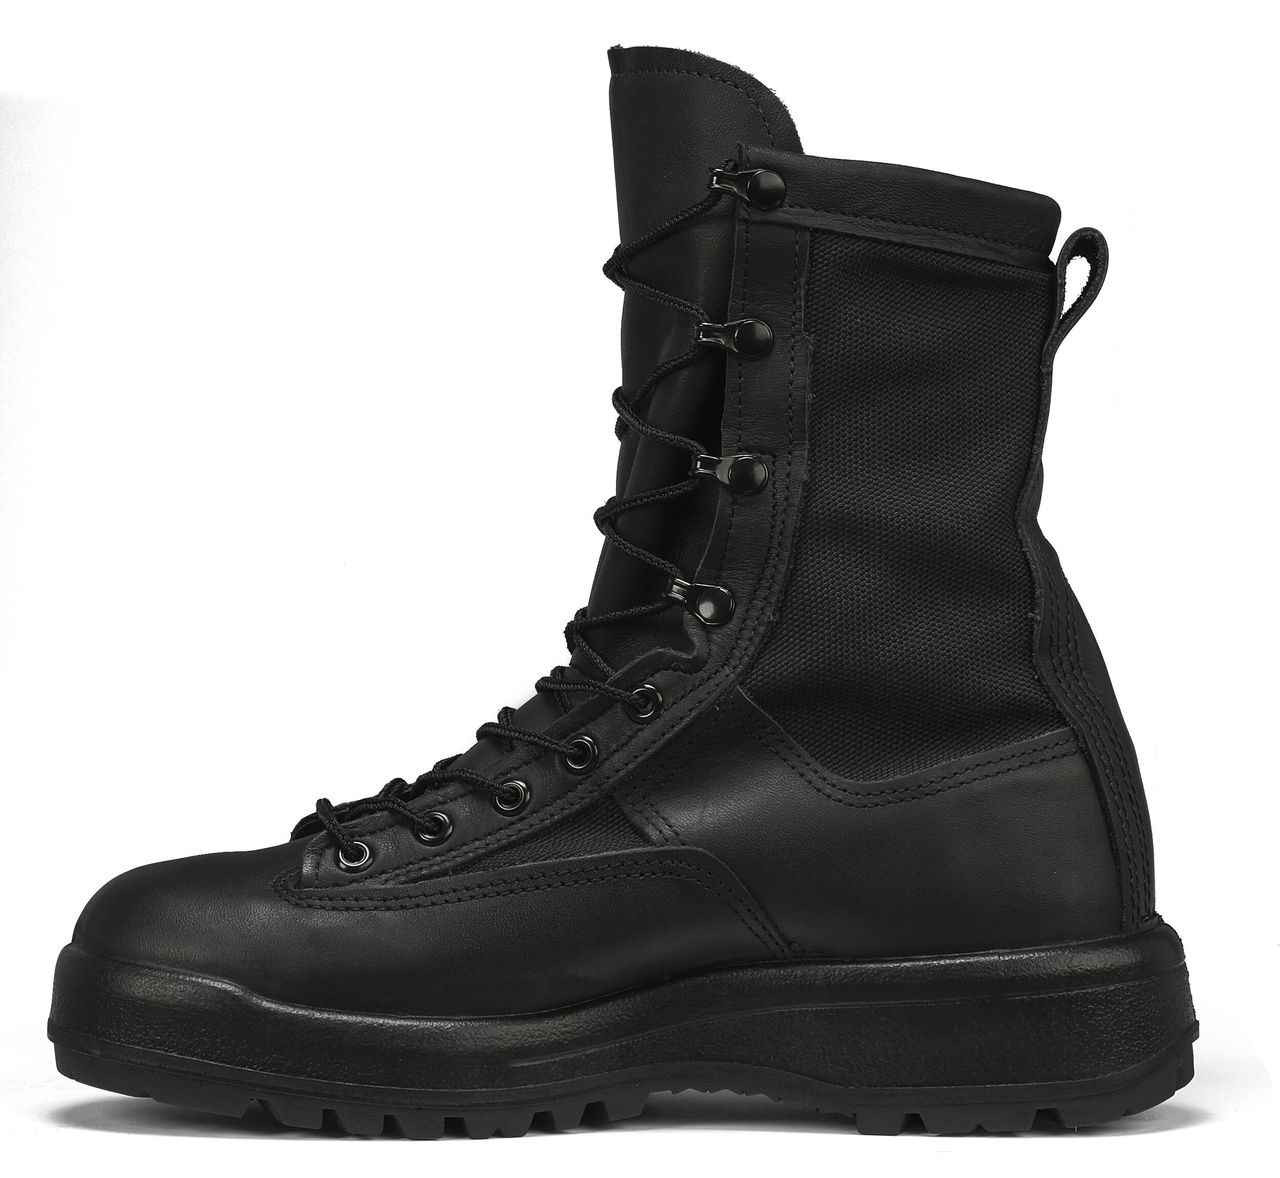 Belleville Boots 700 - Waterproof Black Combat and Flight Boots